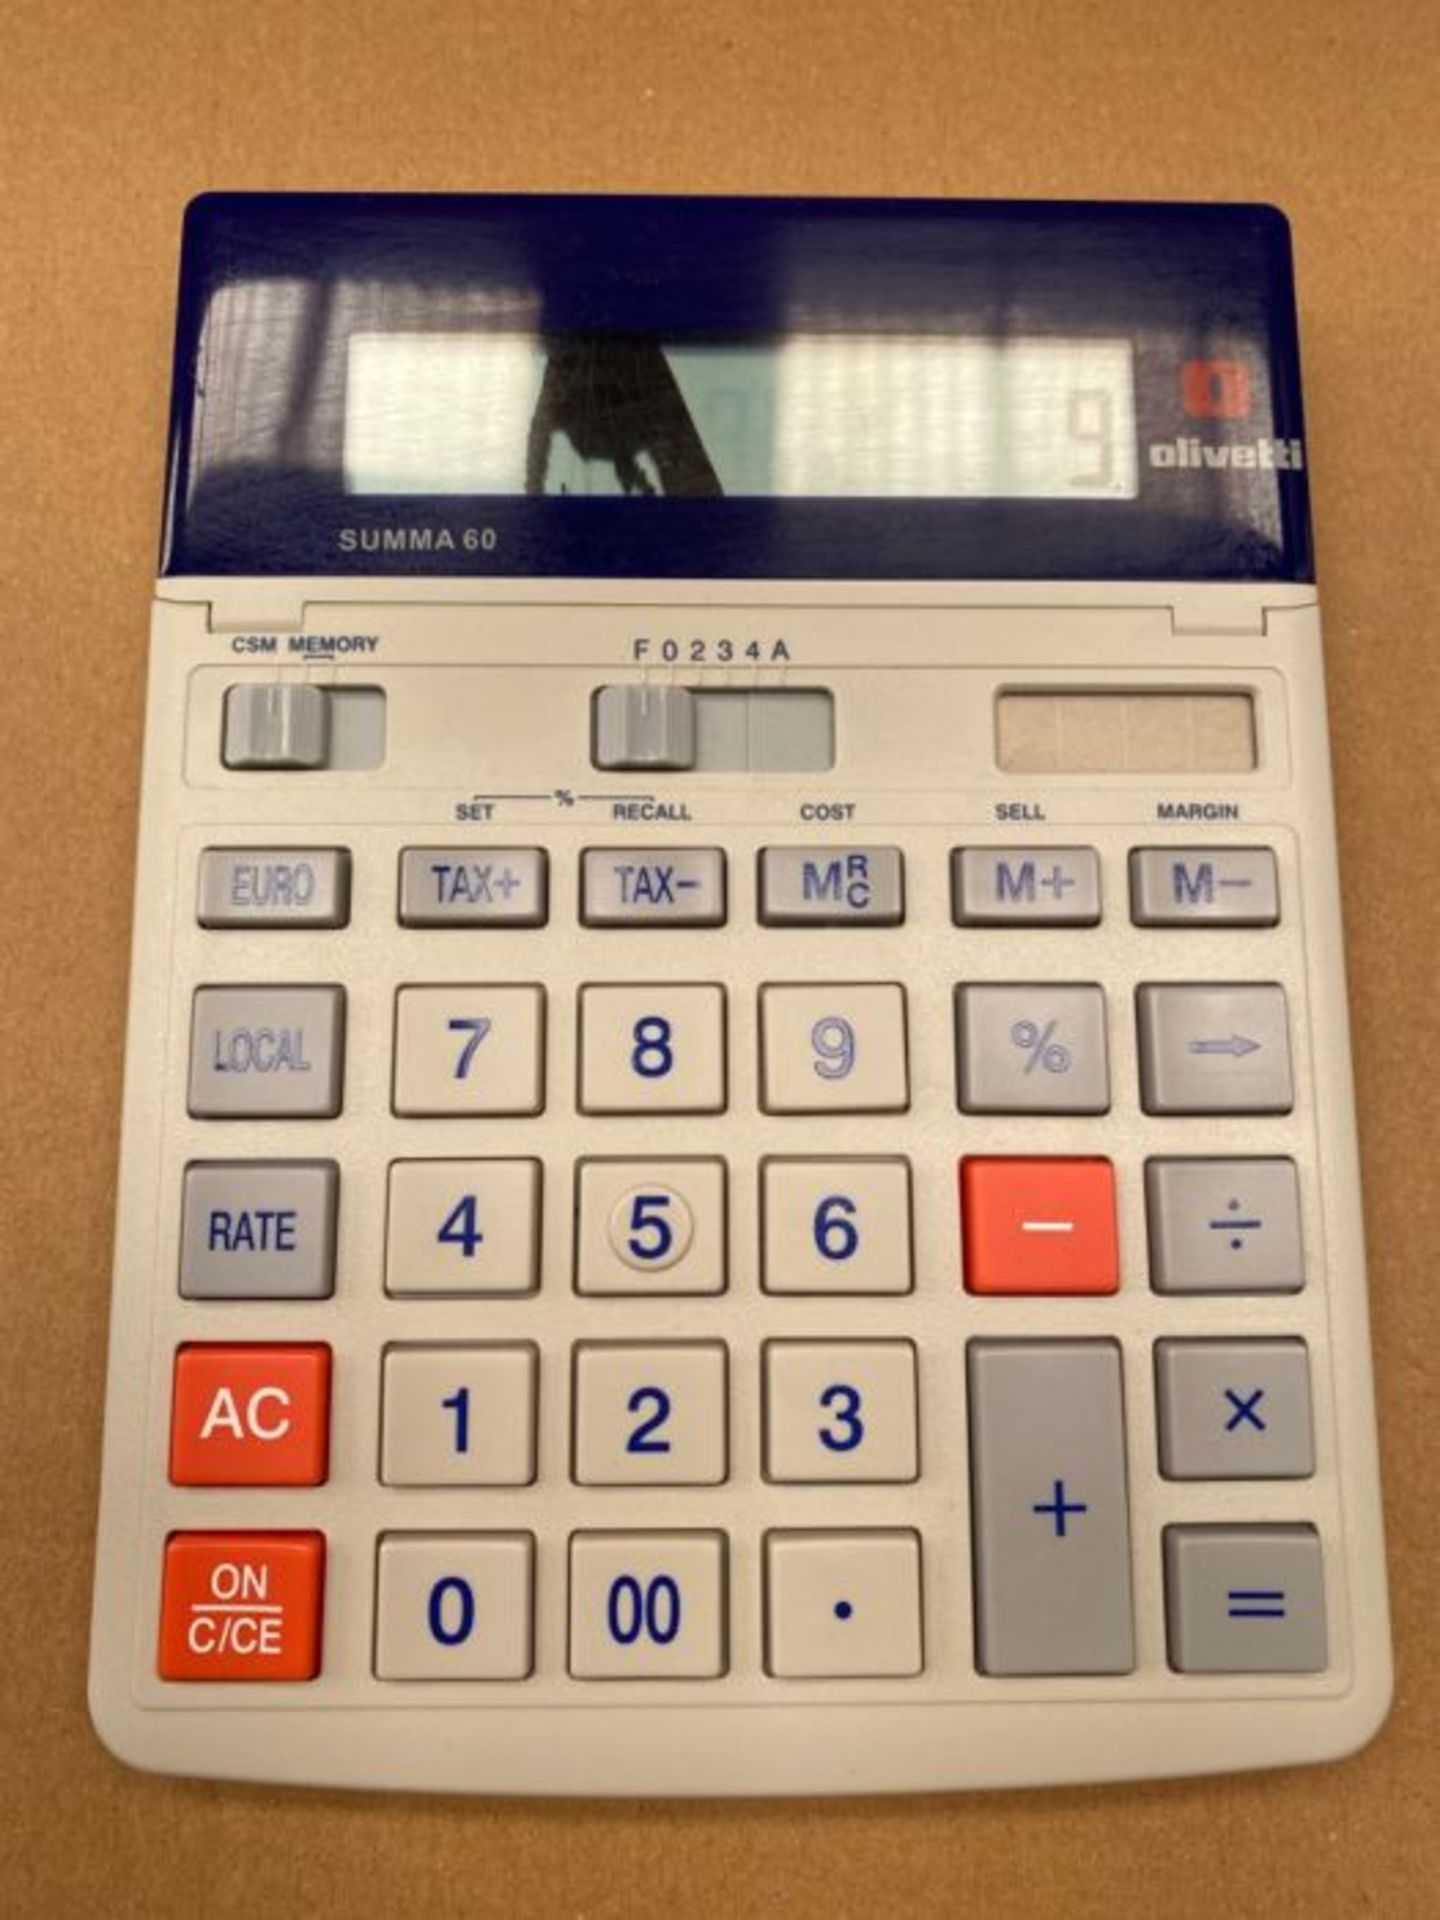 Olivetti b9320 Calculator - Image 3 of 3